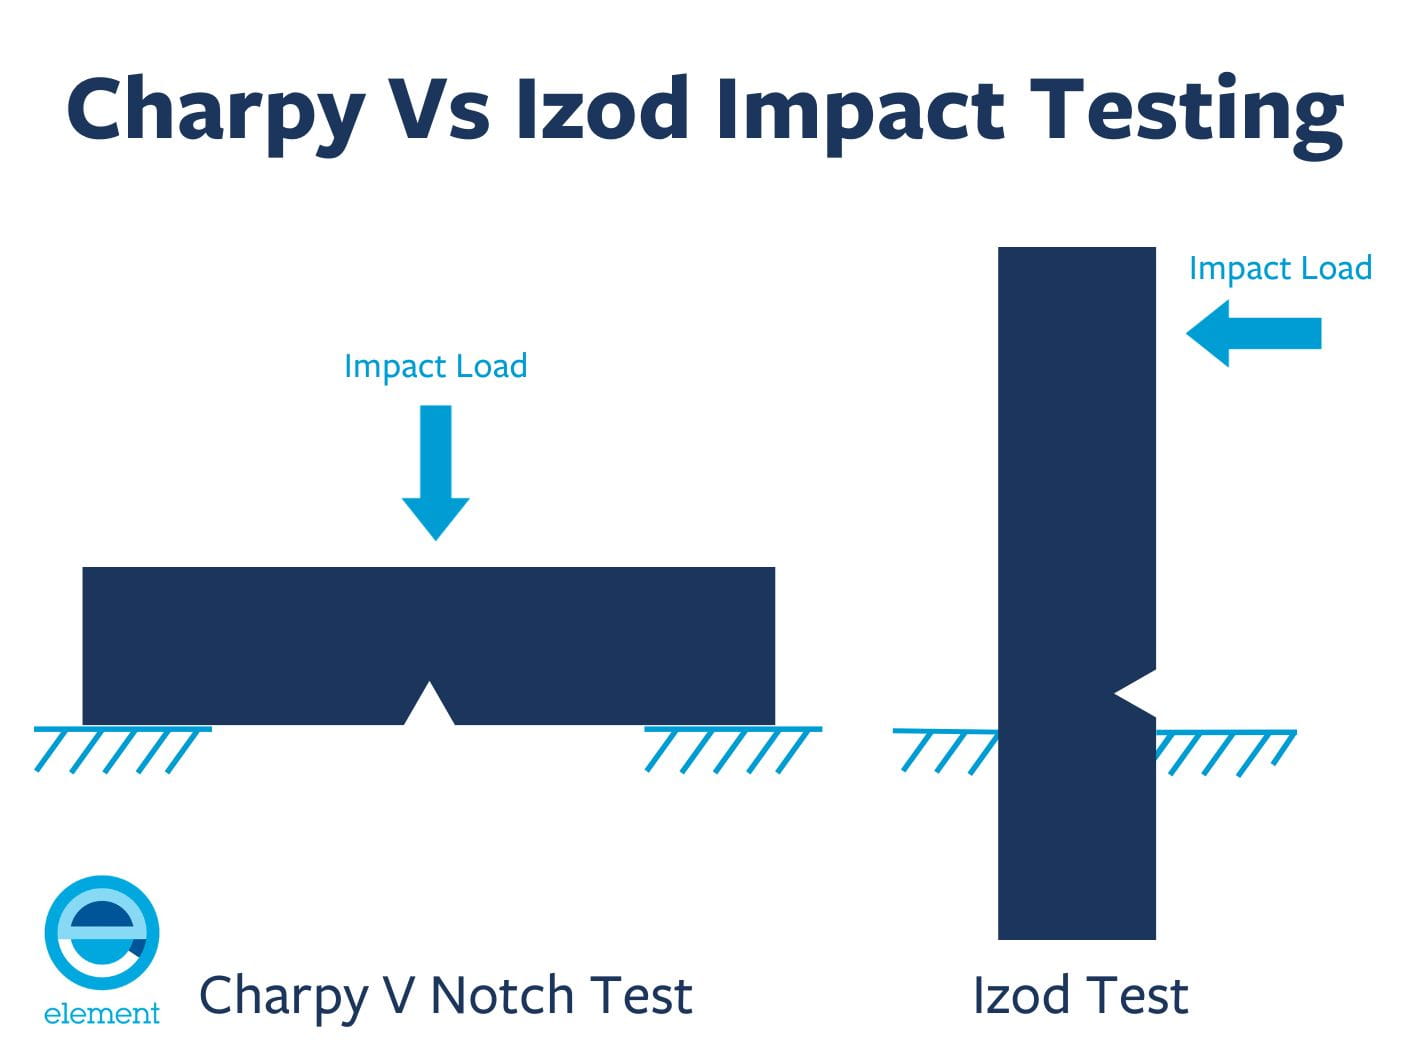 Charpy vs Izod Impact Testing Comparison Infographic.